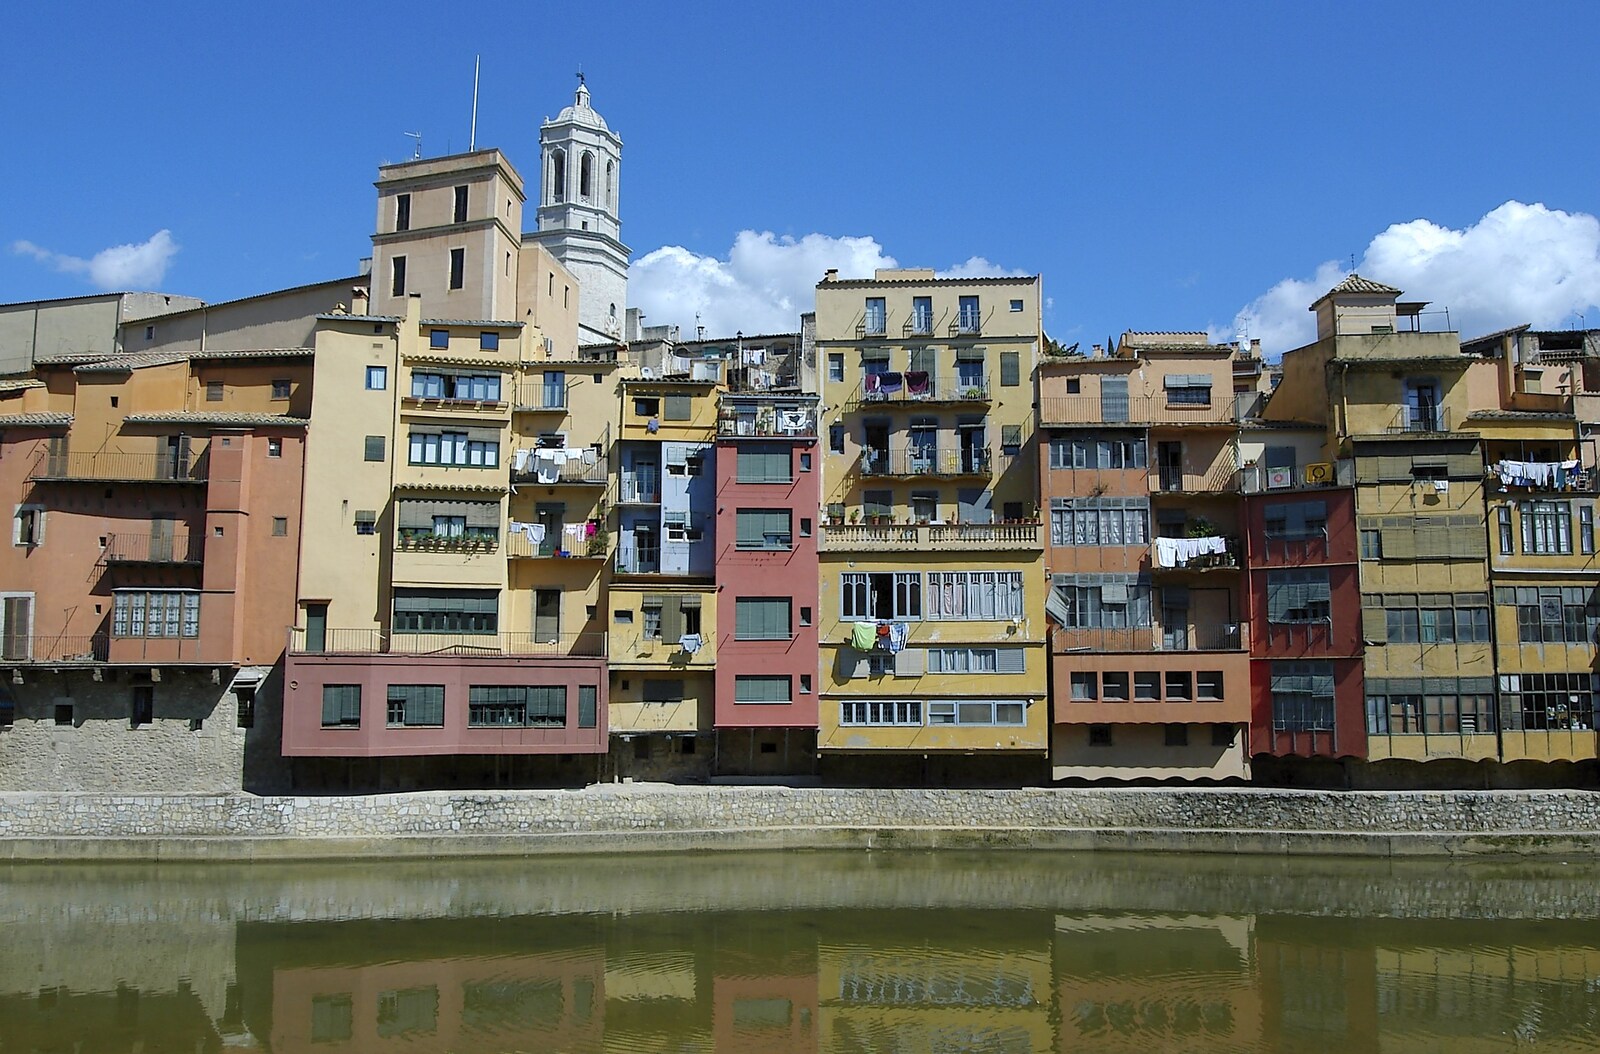 Girona apartment blocks across the river from Girona, Catalunya, Spain - 17th September 2006